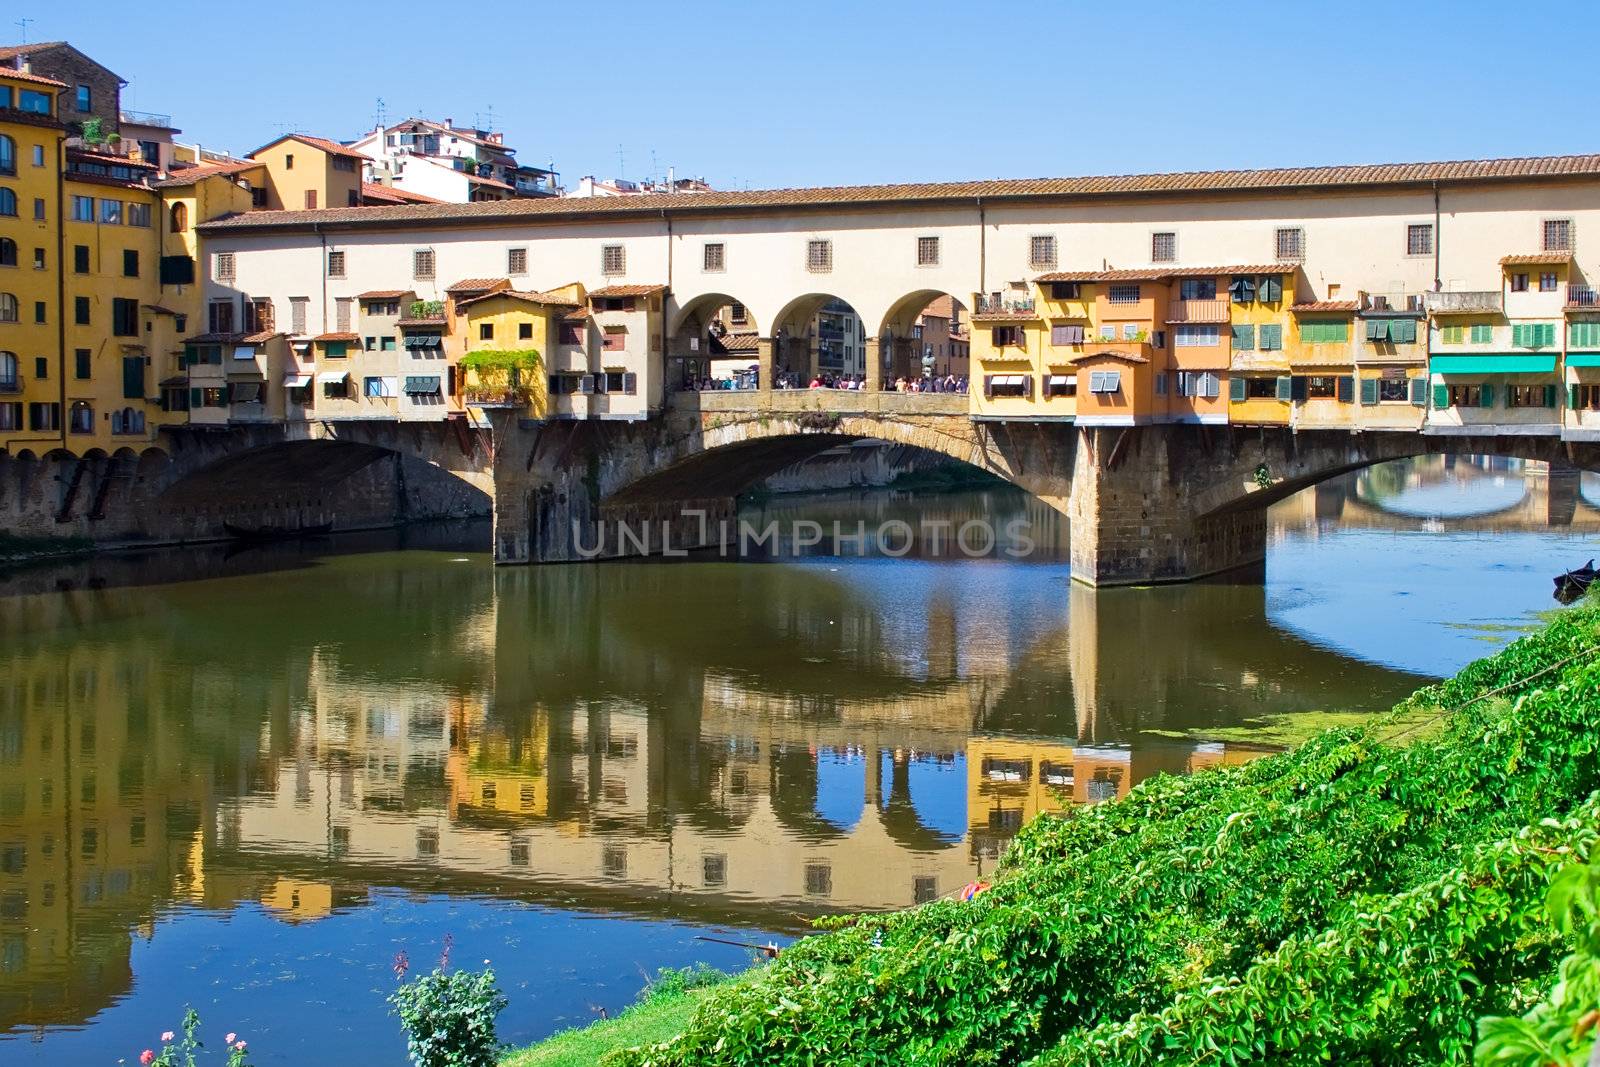 The oldest bridge Ponte Vecchio in Florence. Italy.